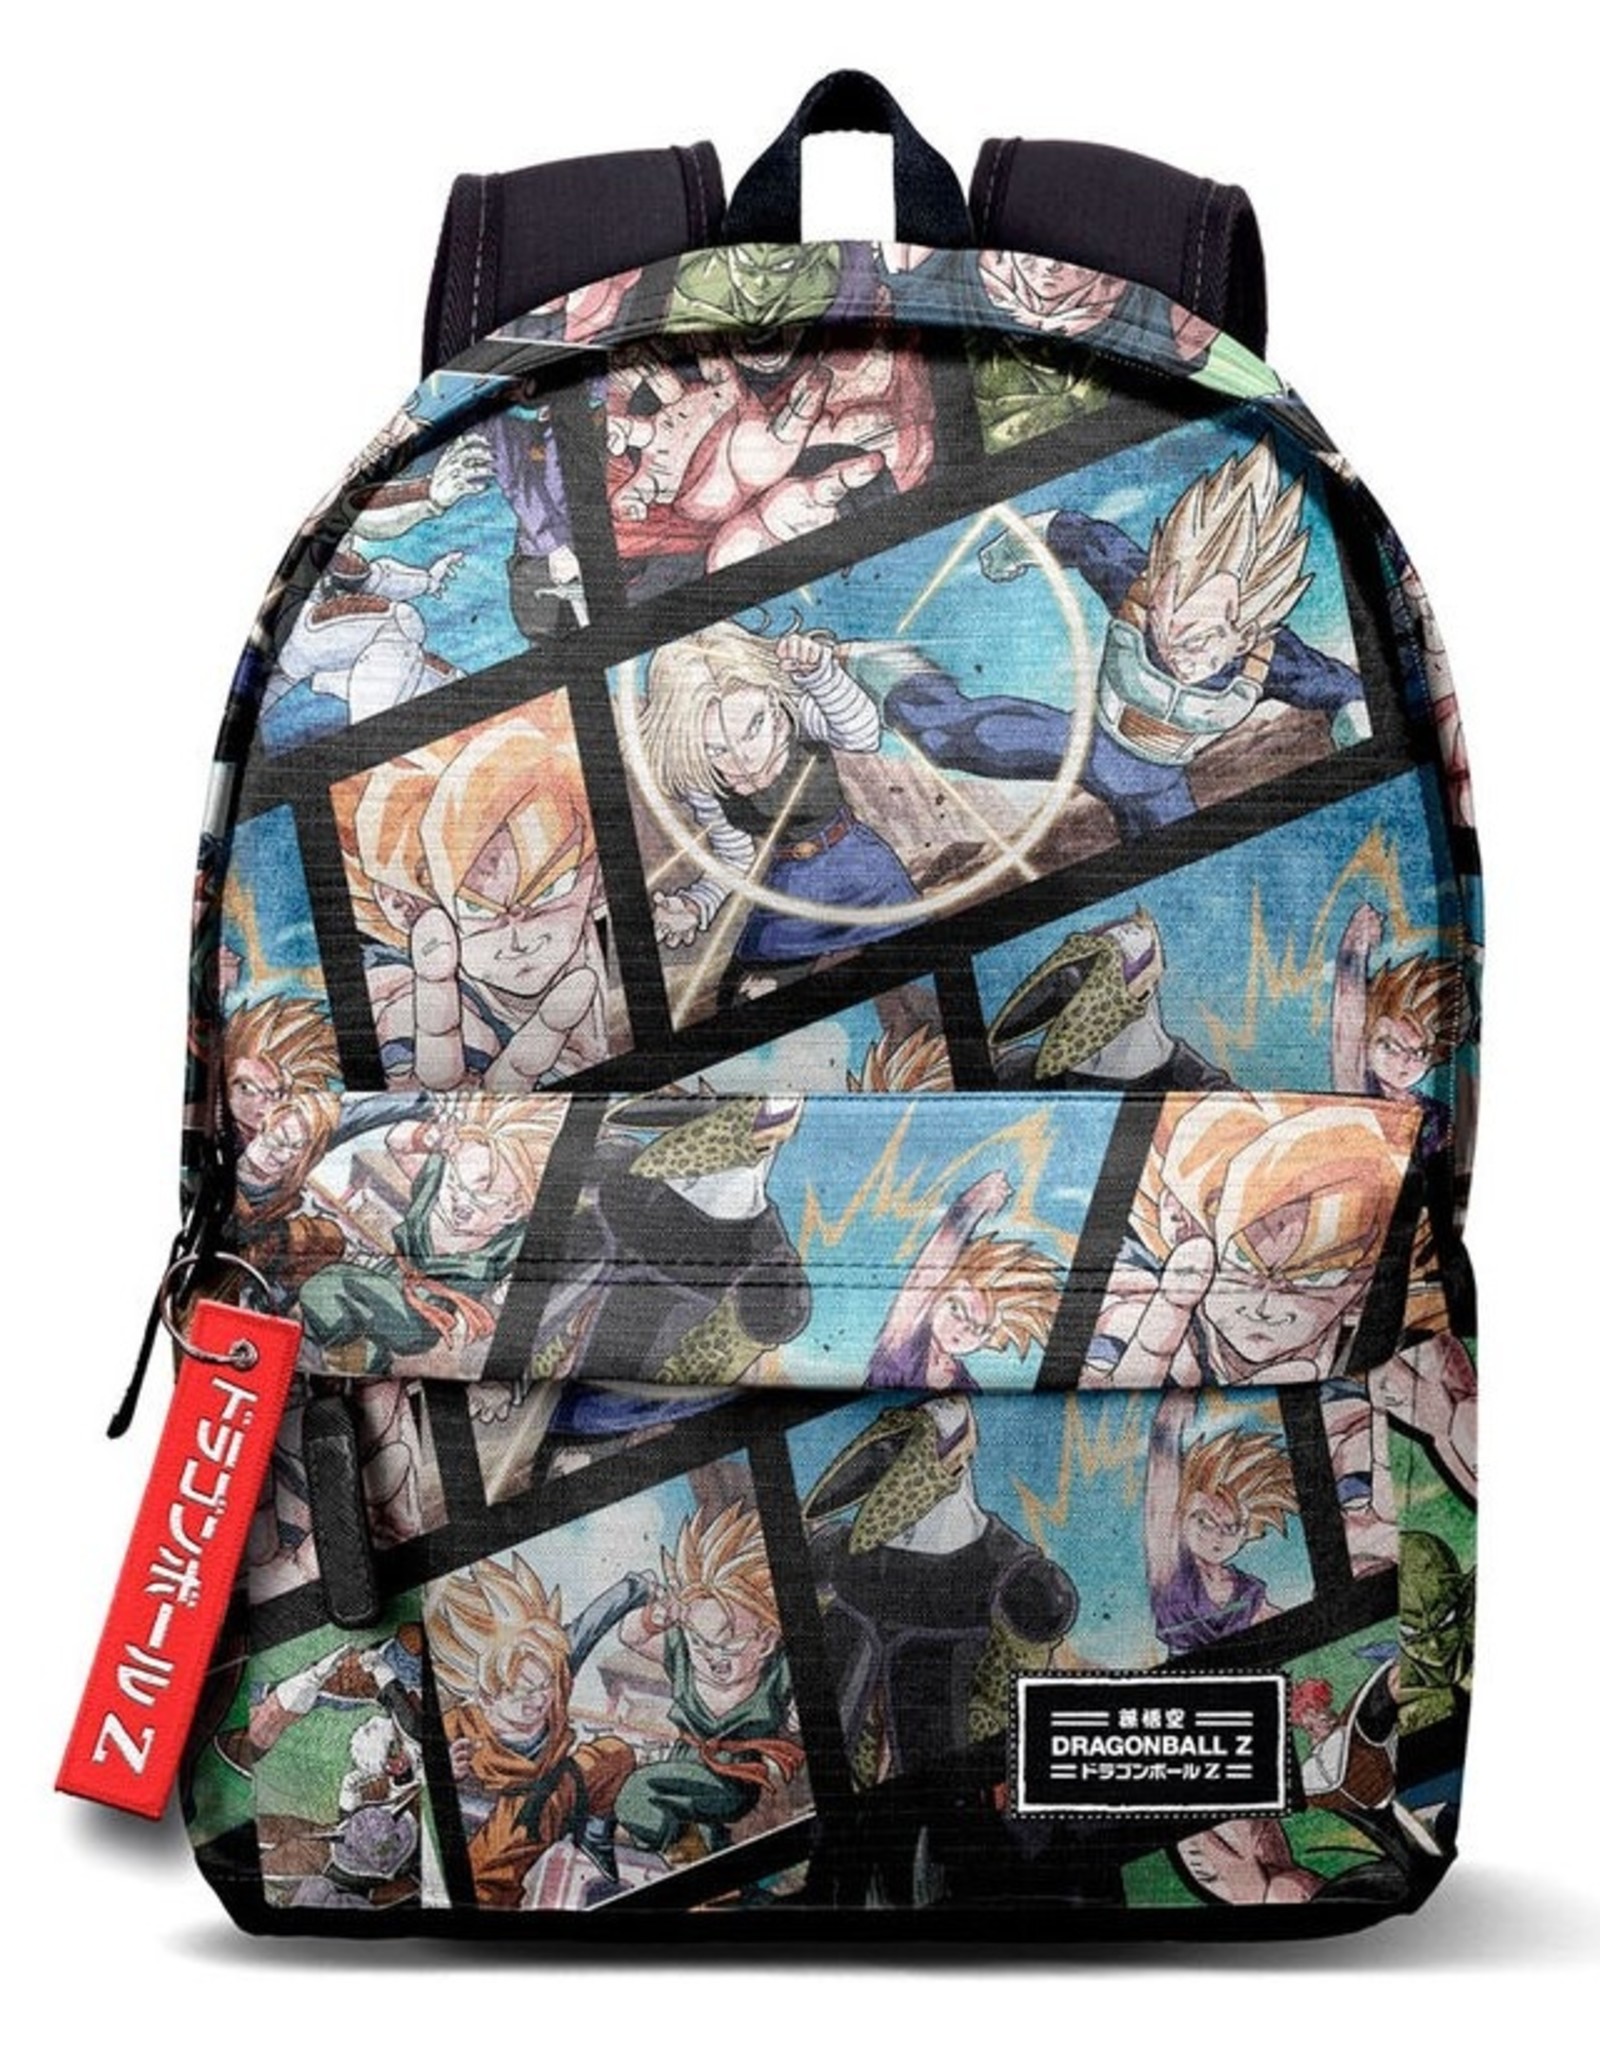 Dragon Ball Z Merchandise bags - Dragon Ball Z backpack 42cm